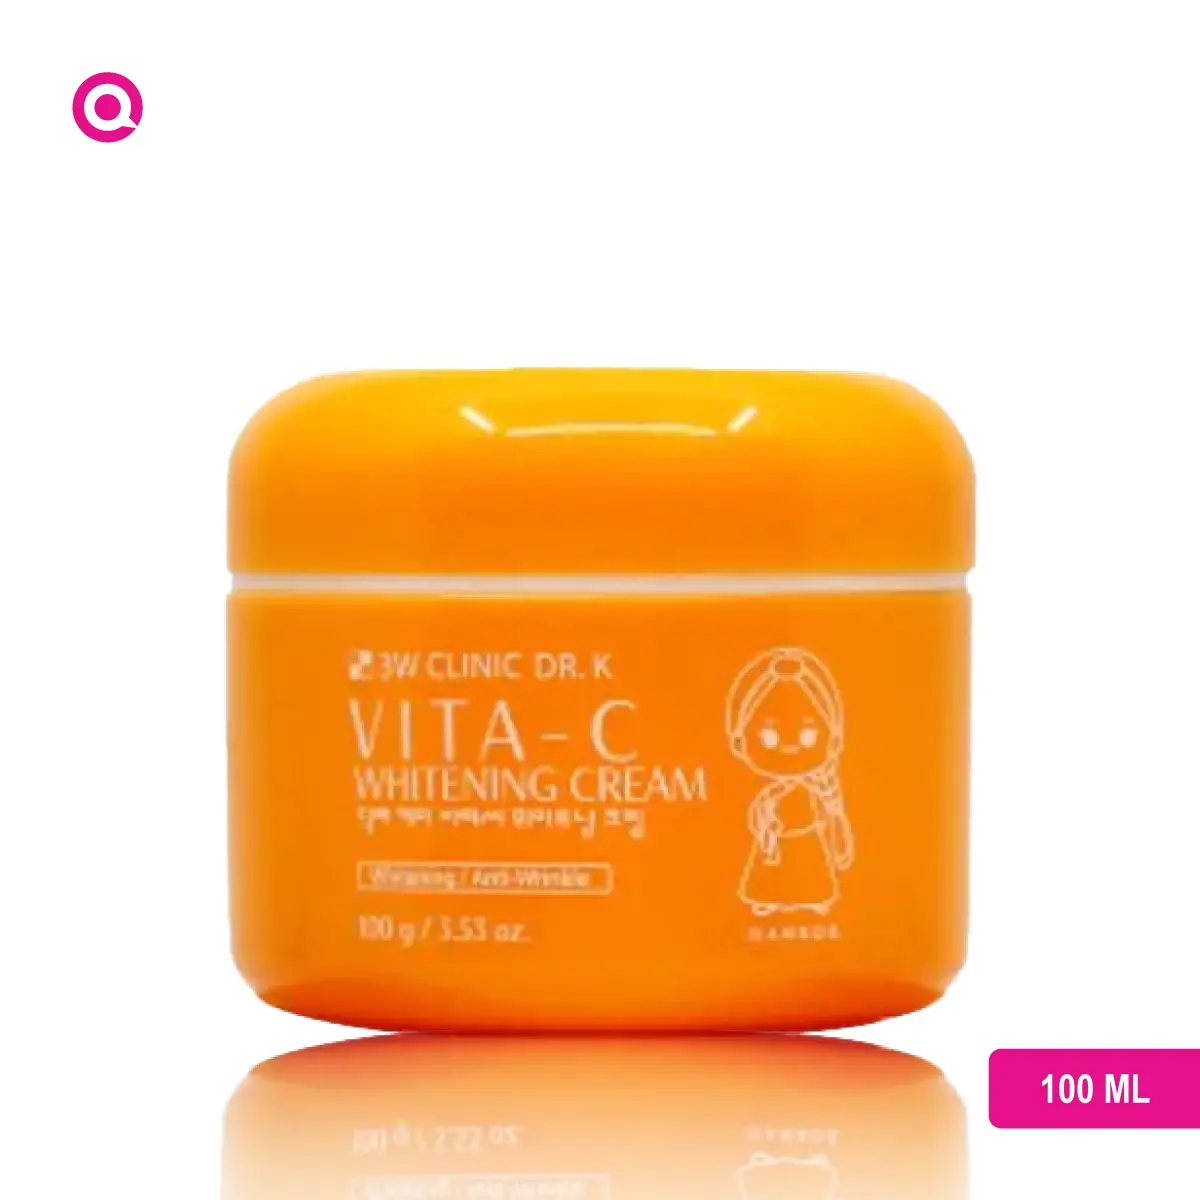 3W Clinic Dr. K Vita-C Whitening Cream - The Ultimate Skin Savior-01